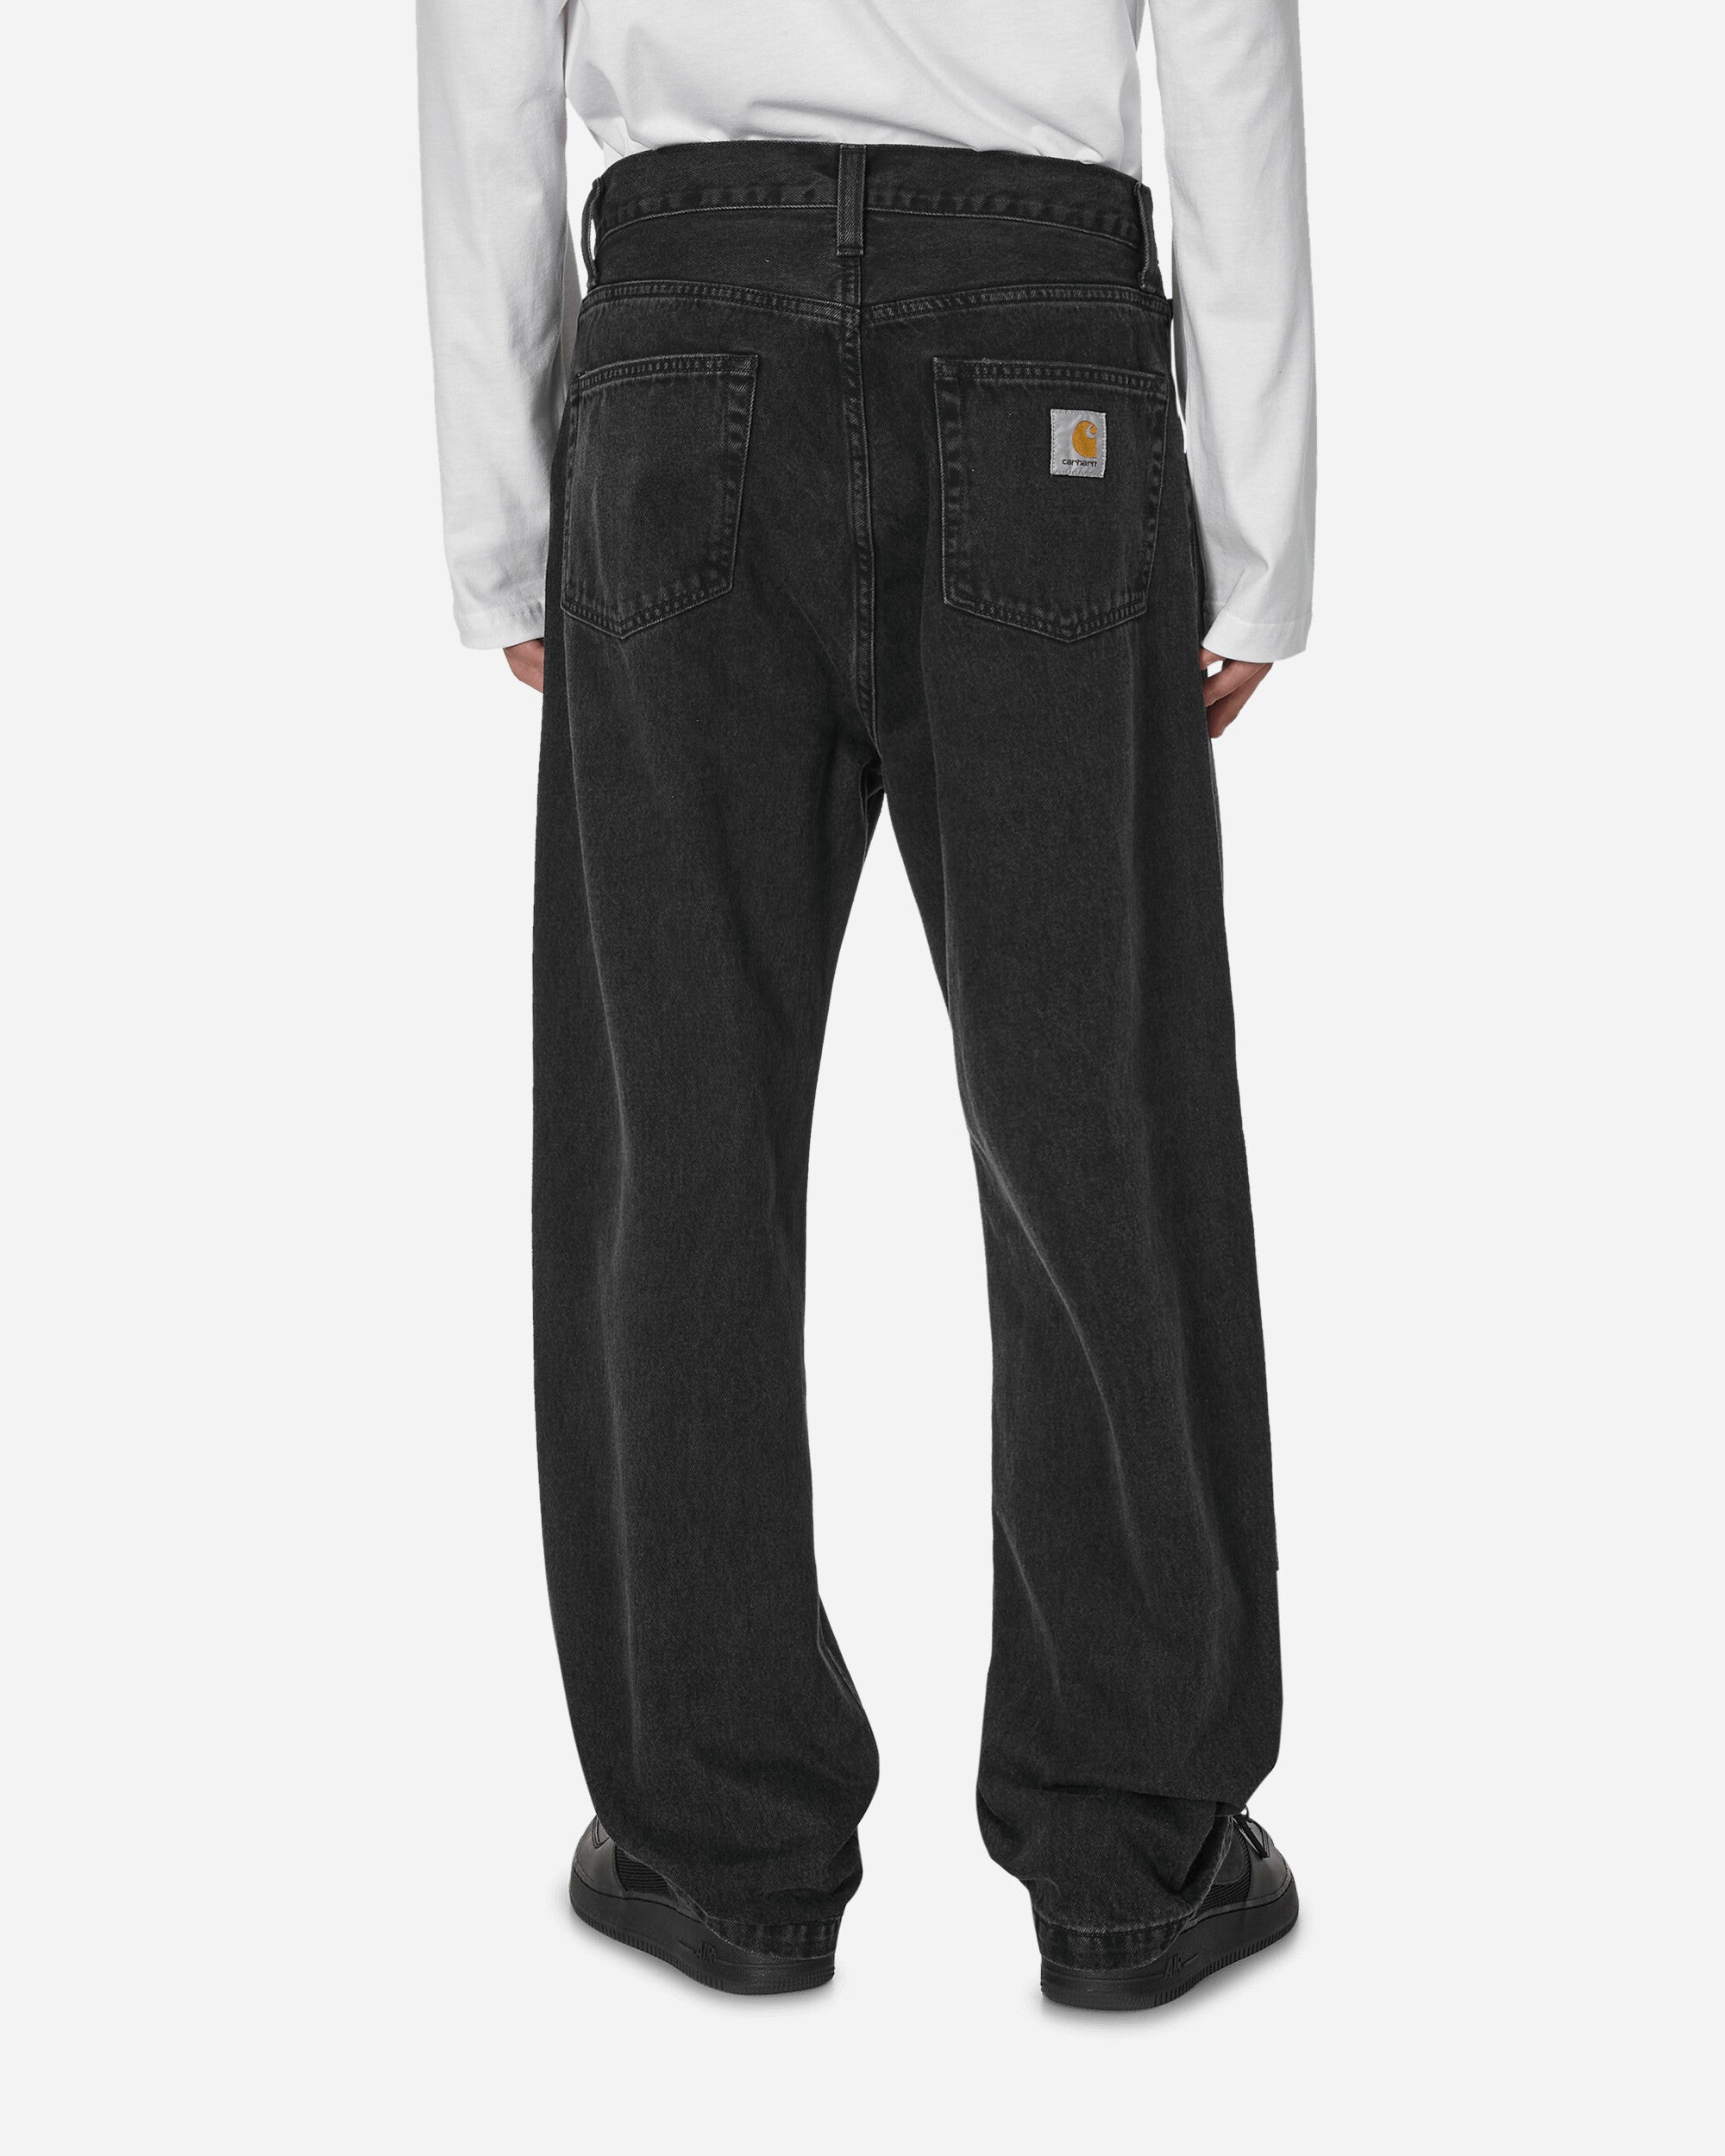 Carhartt WIP Landon Pant Black Pants Trousers I030468 8906